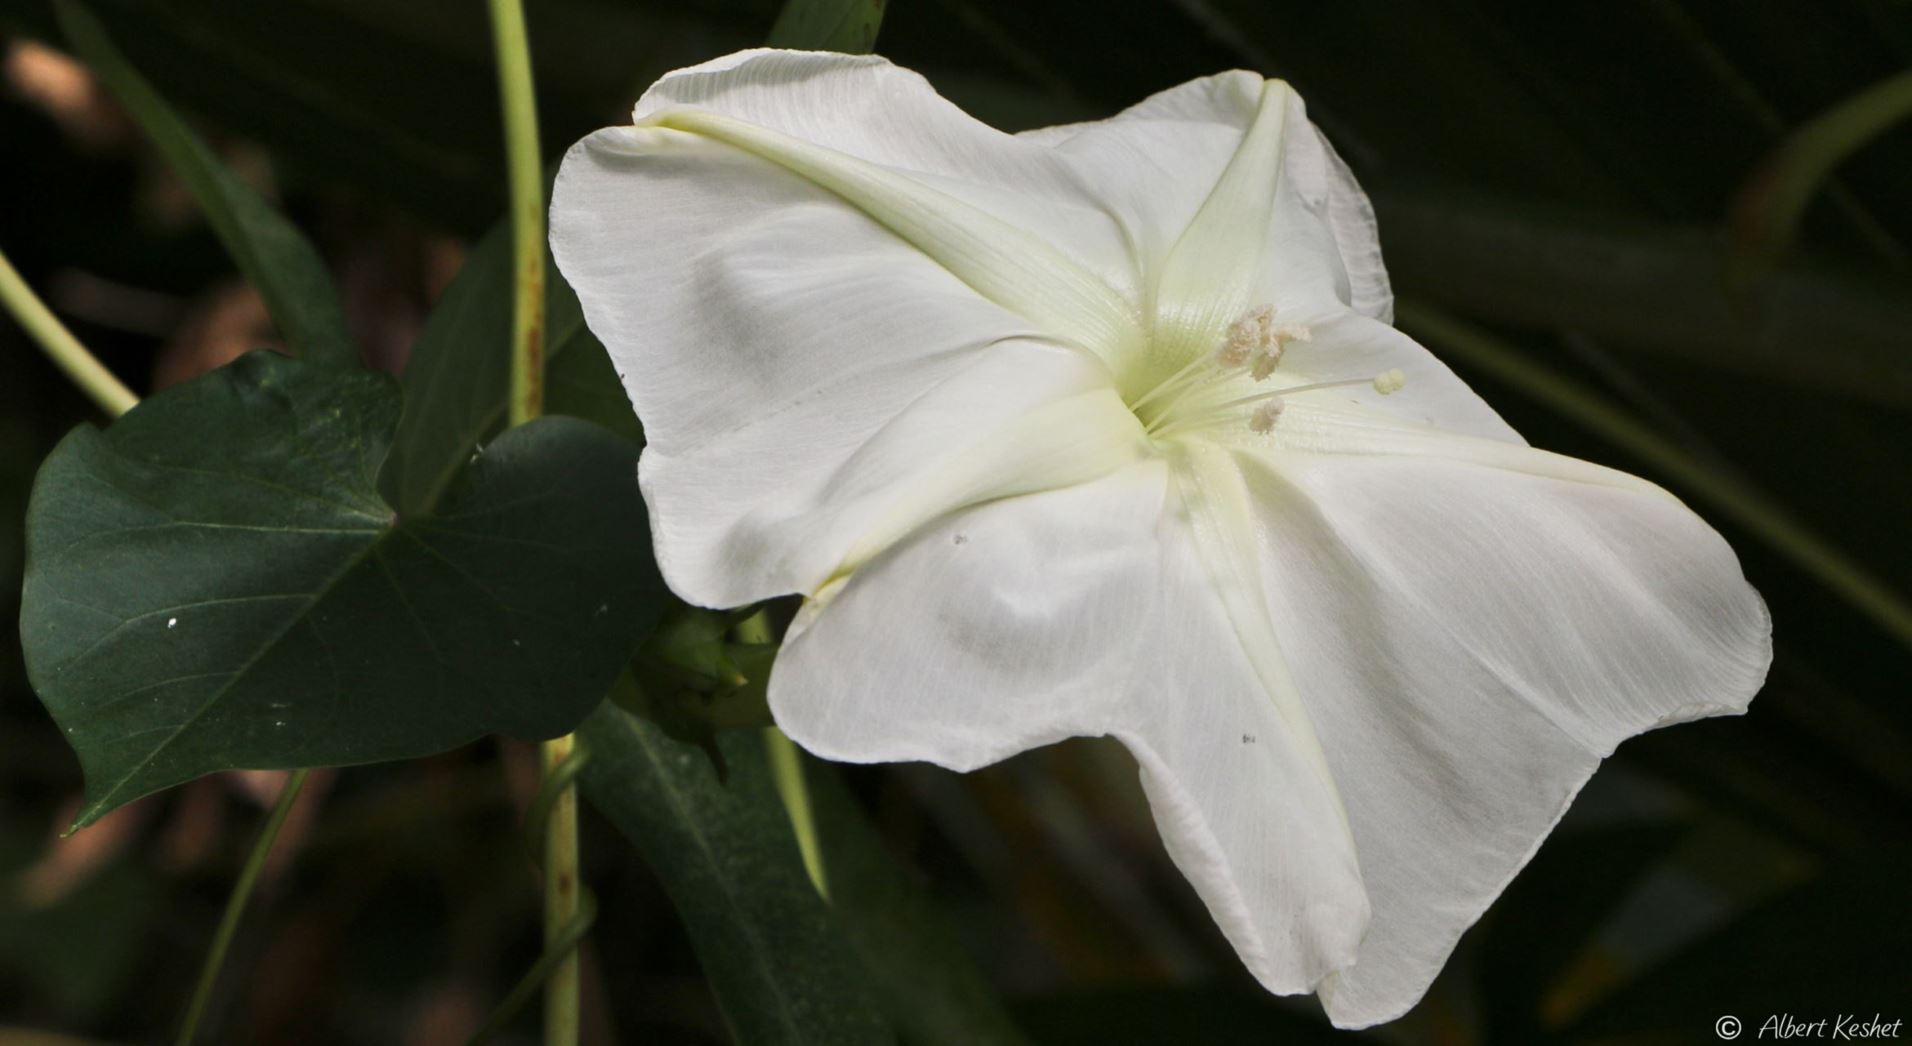 Ipomoea alba - Moonflower,  Moon Vine, Giant White Moonflower, לפופית לבנה, לפופית לבנה